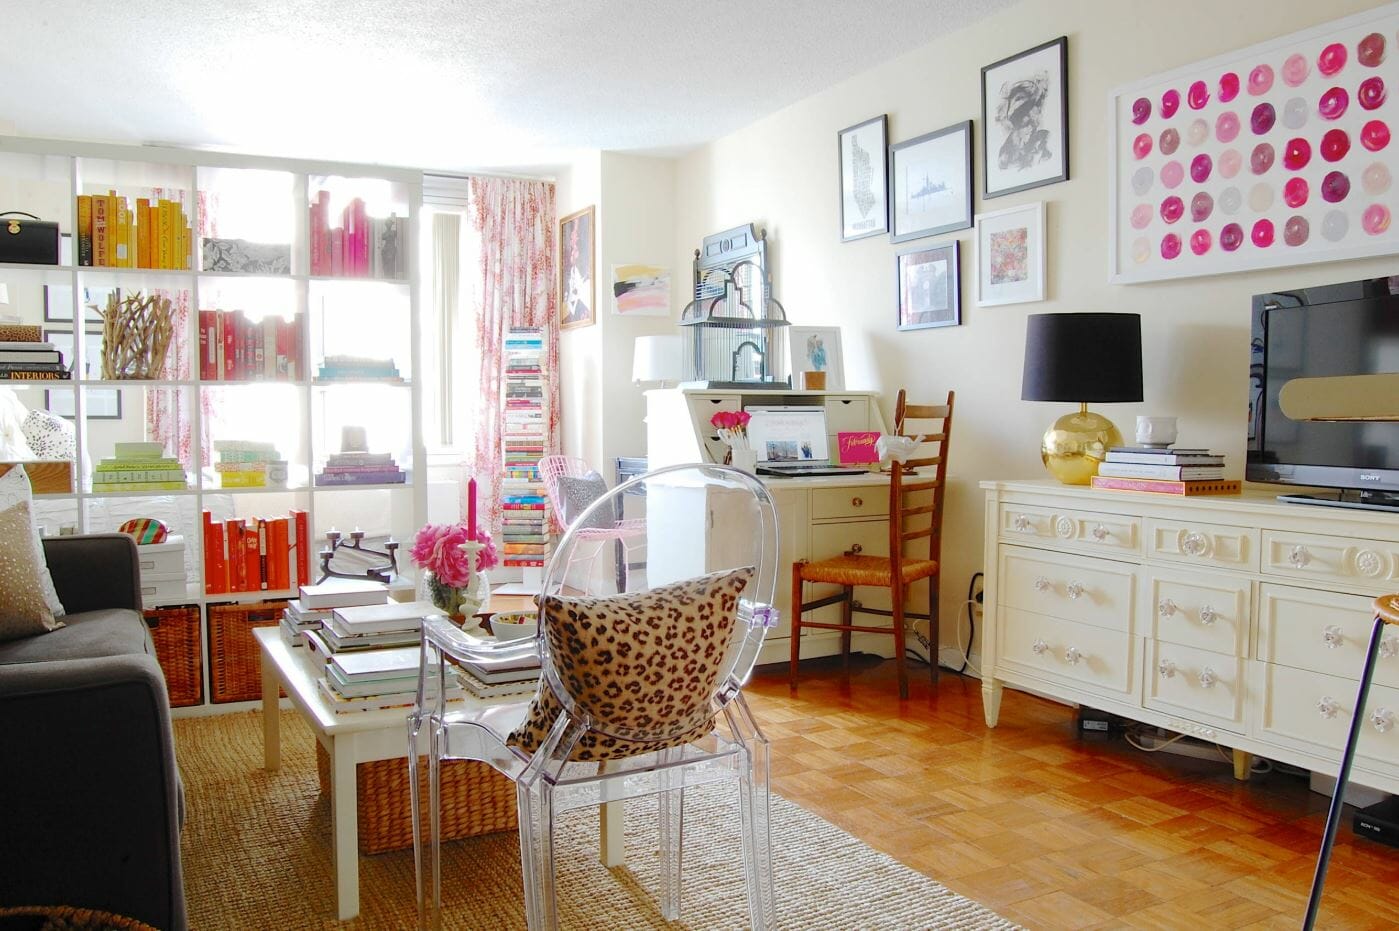 https://www.decorilla.com/online-decorating/wp-content/uploads/2019/04/small-studio-apartment-furniture.jpg